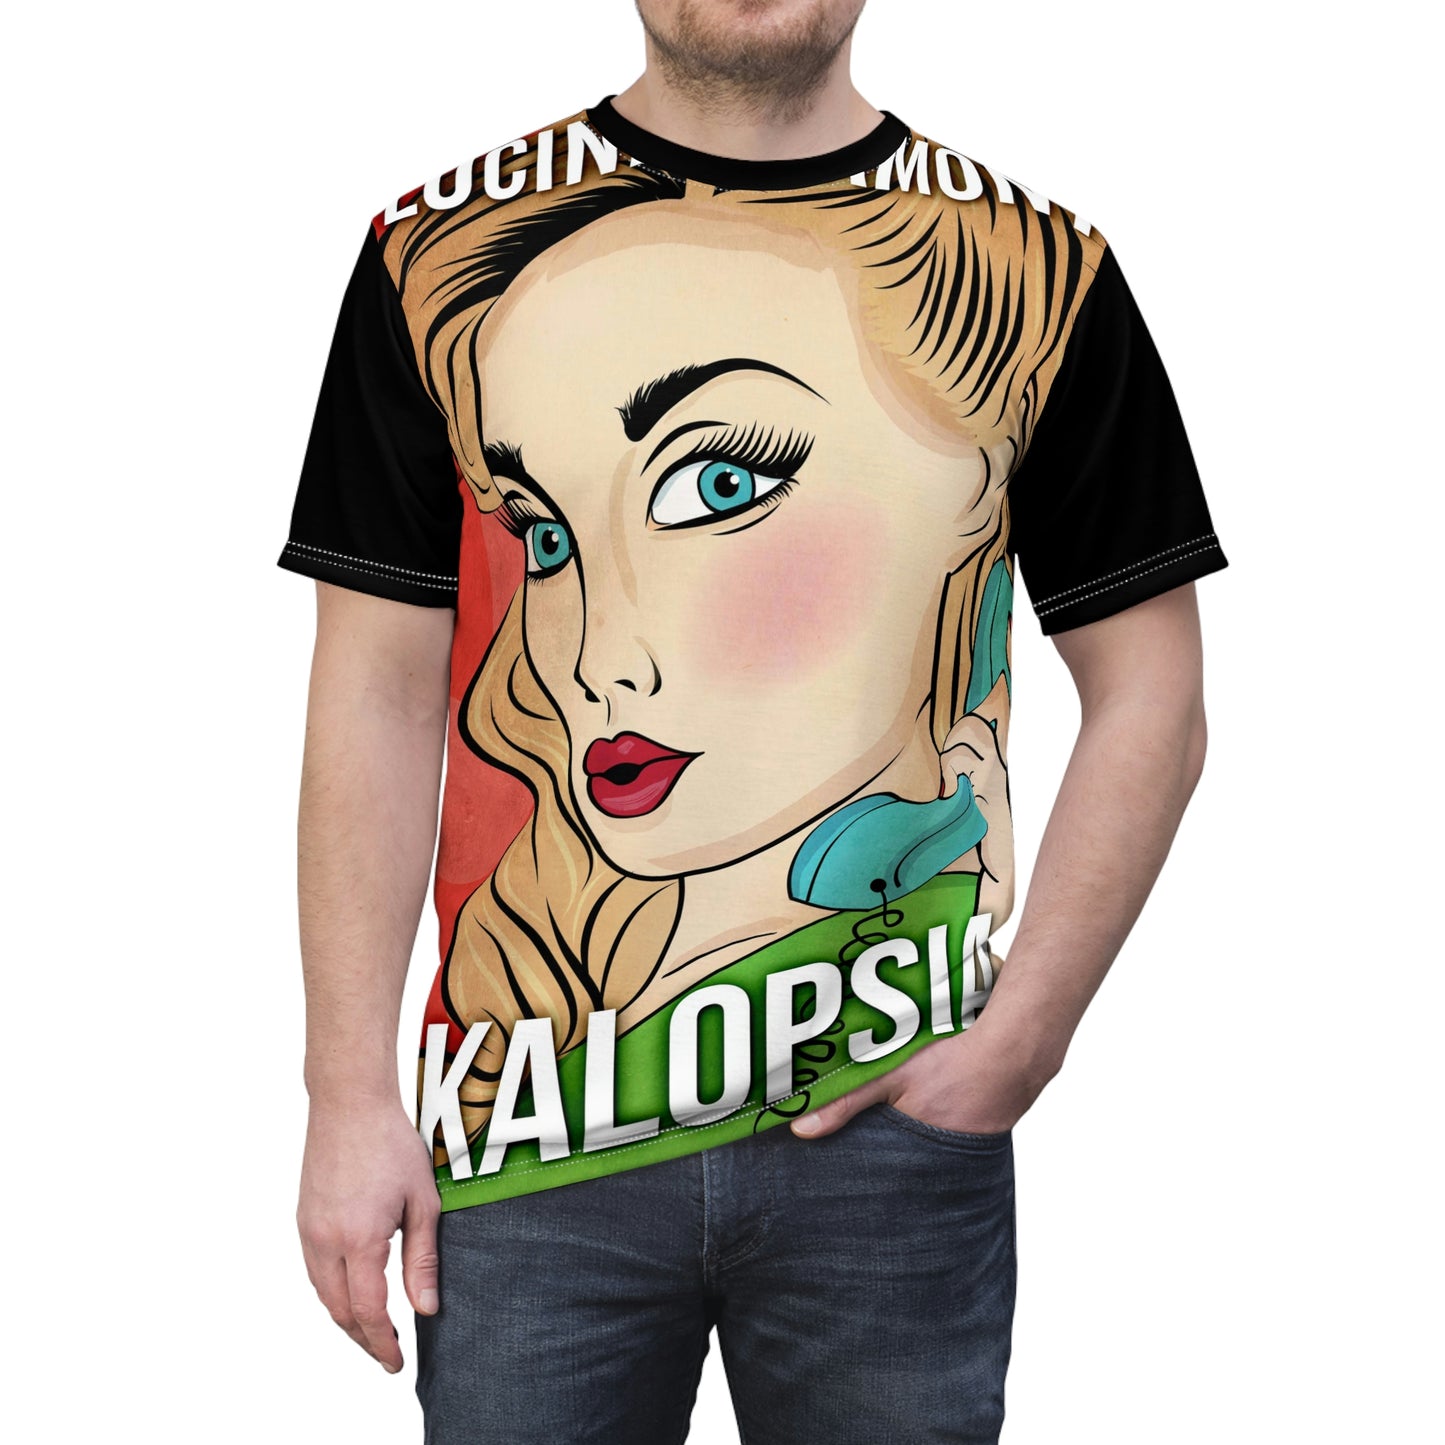 Kalopsia - Unisex All-Over Print Cut & Sew T-Shirt